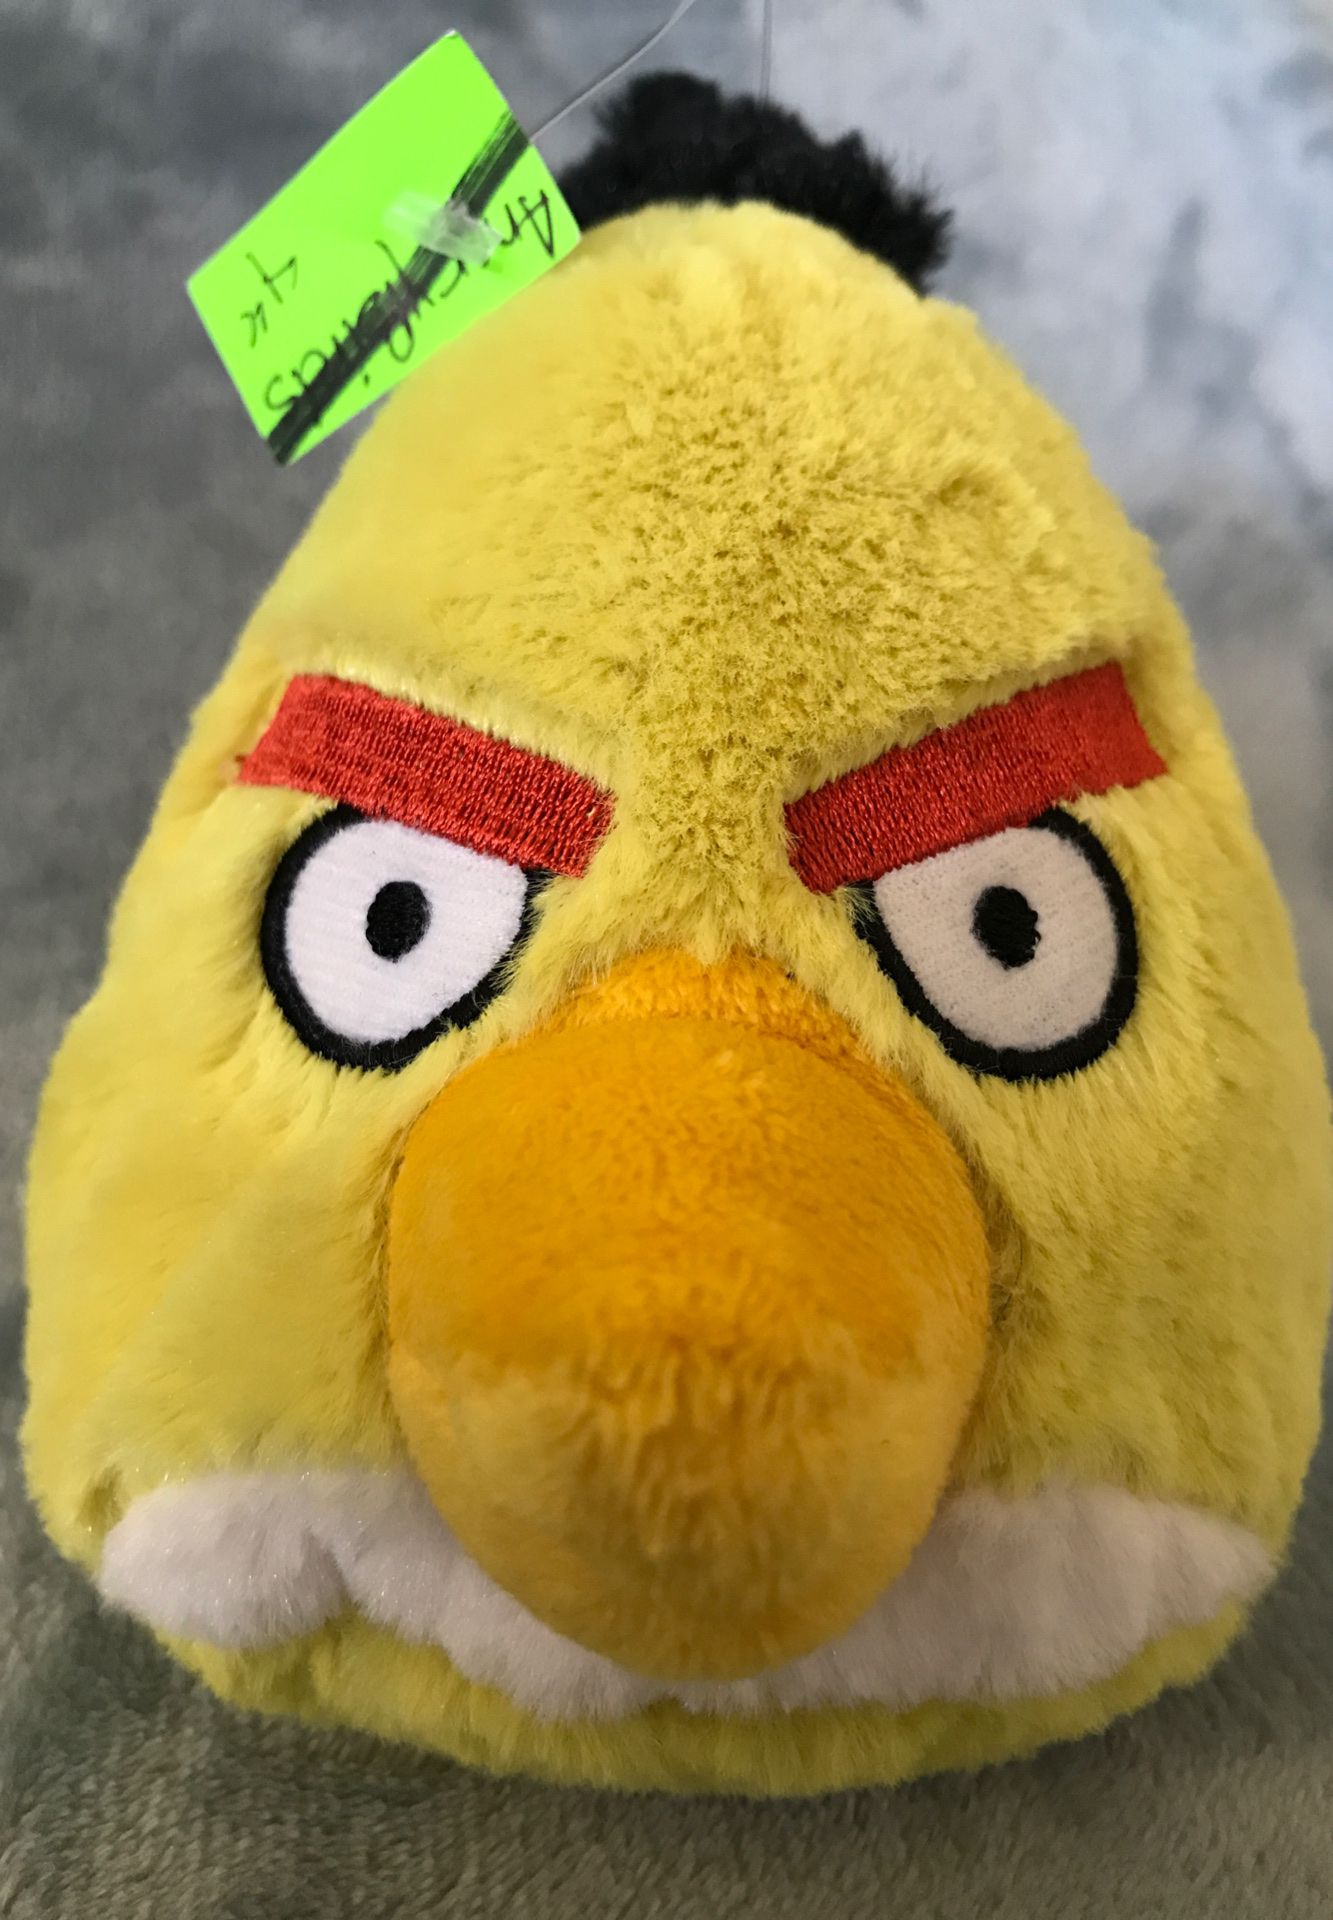 4” Angry Birds Stuffed animal